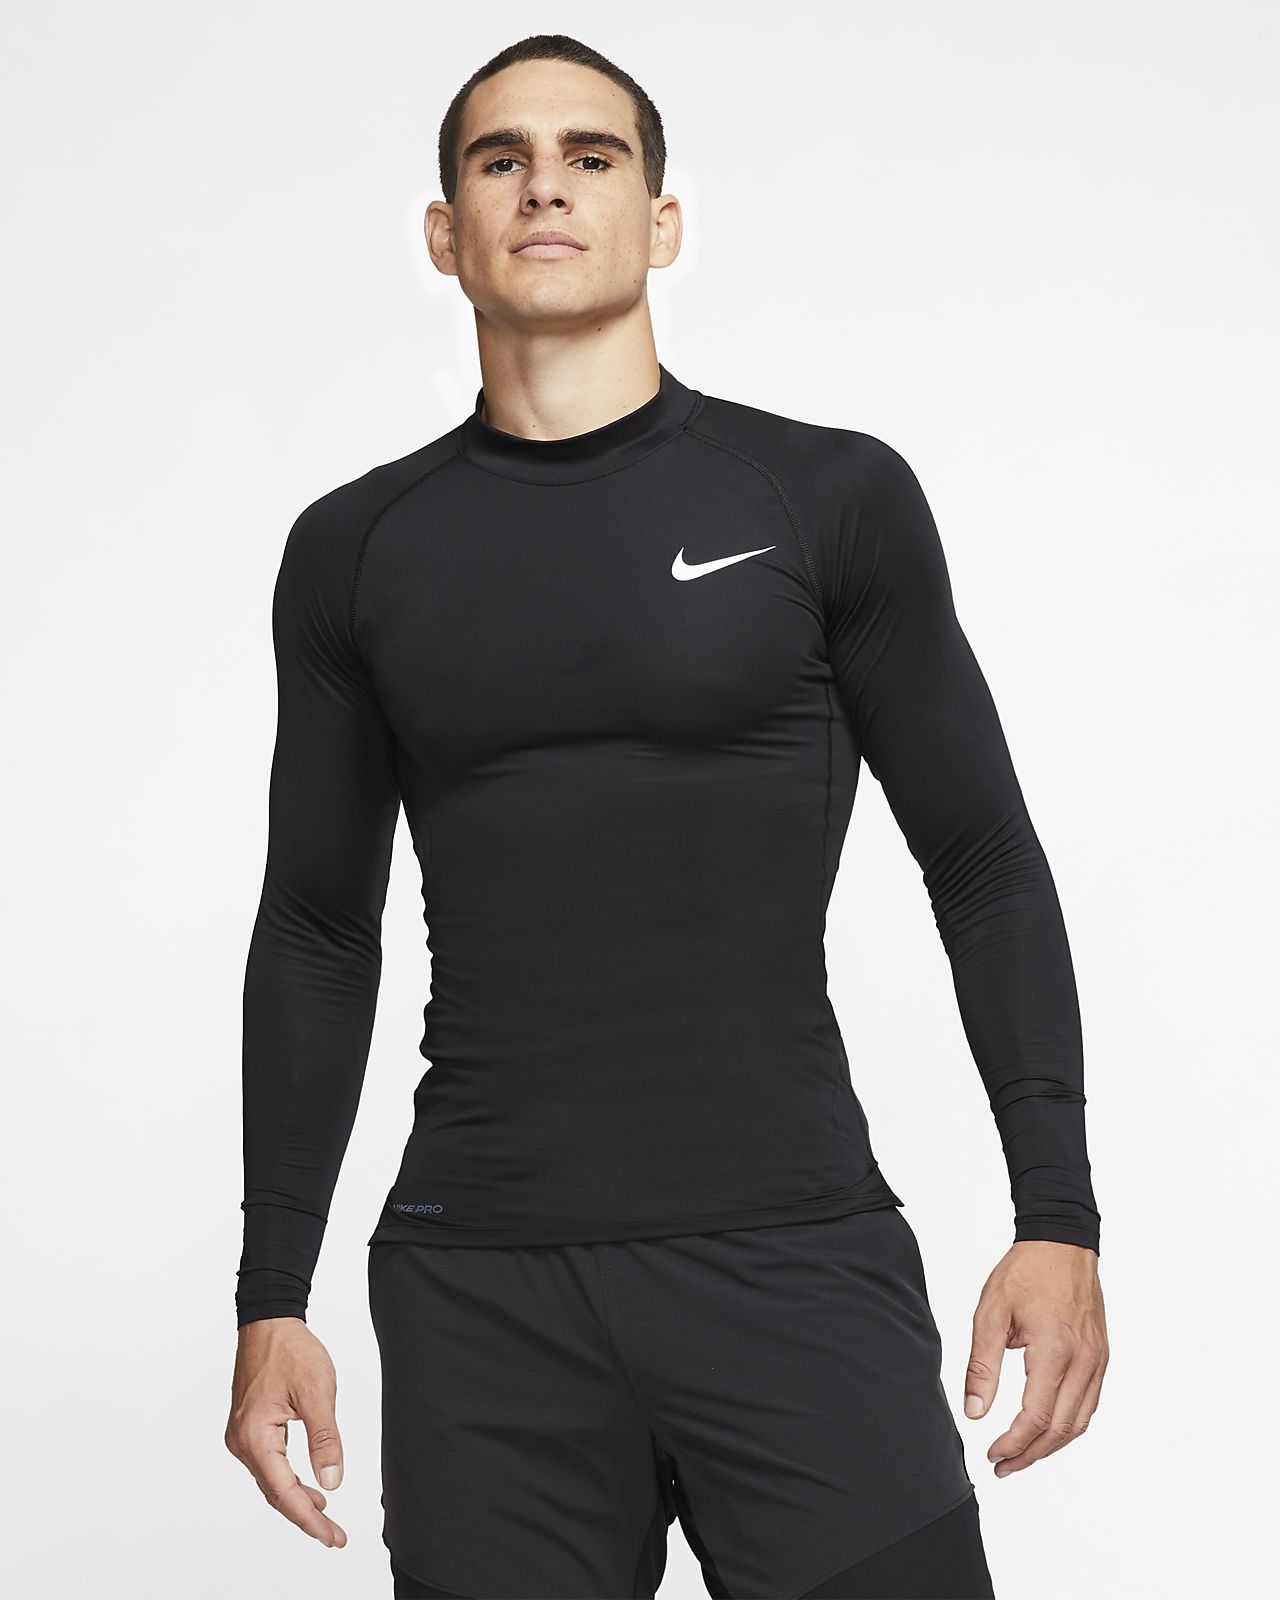 indstudering Sinewi bånd Nike Pro Long Sleeve Shirt Italy, SAVE 42% - mpgc.net